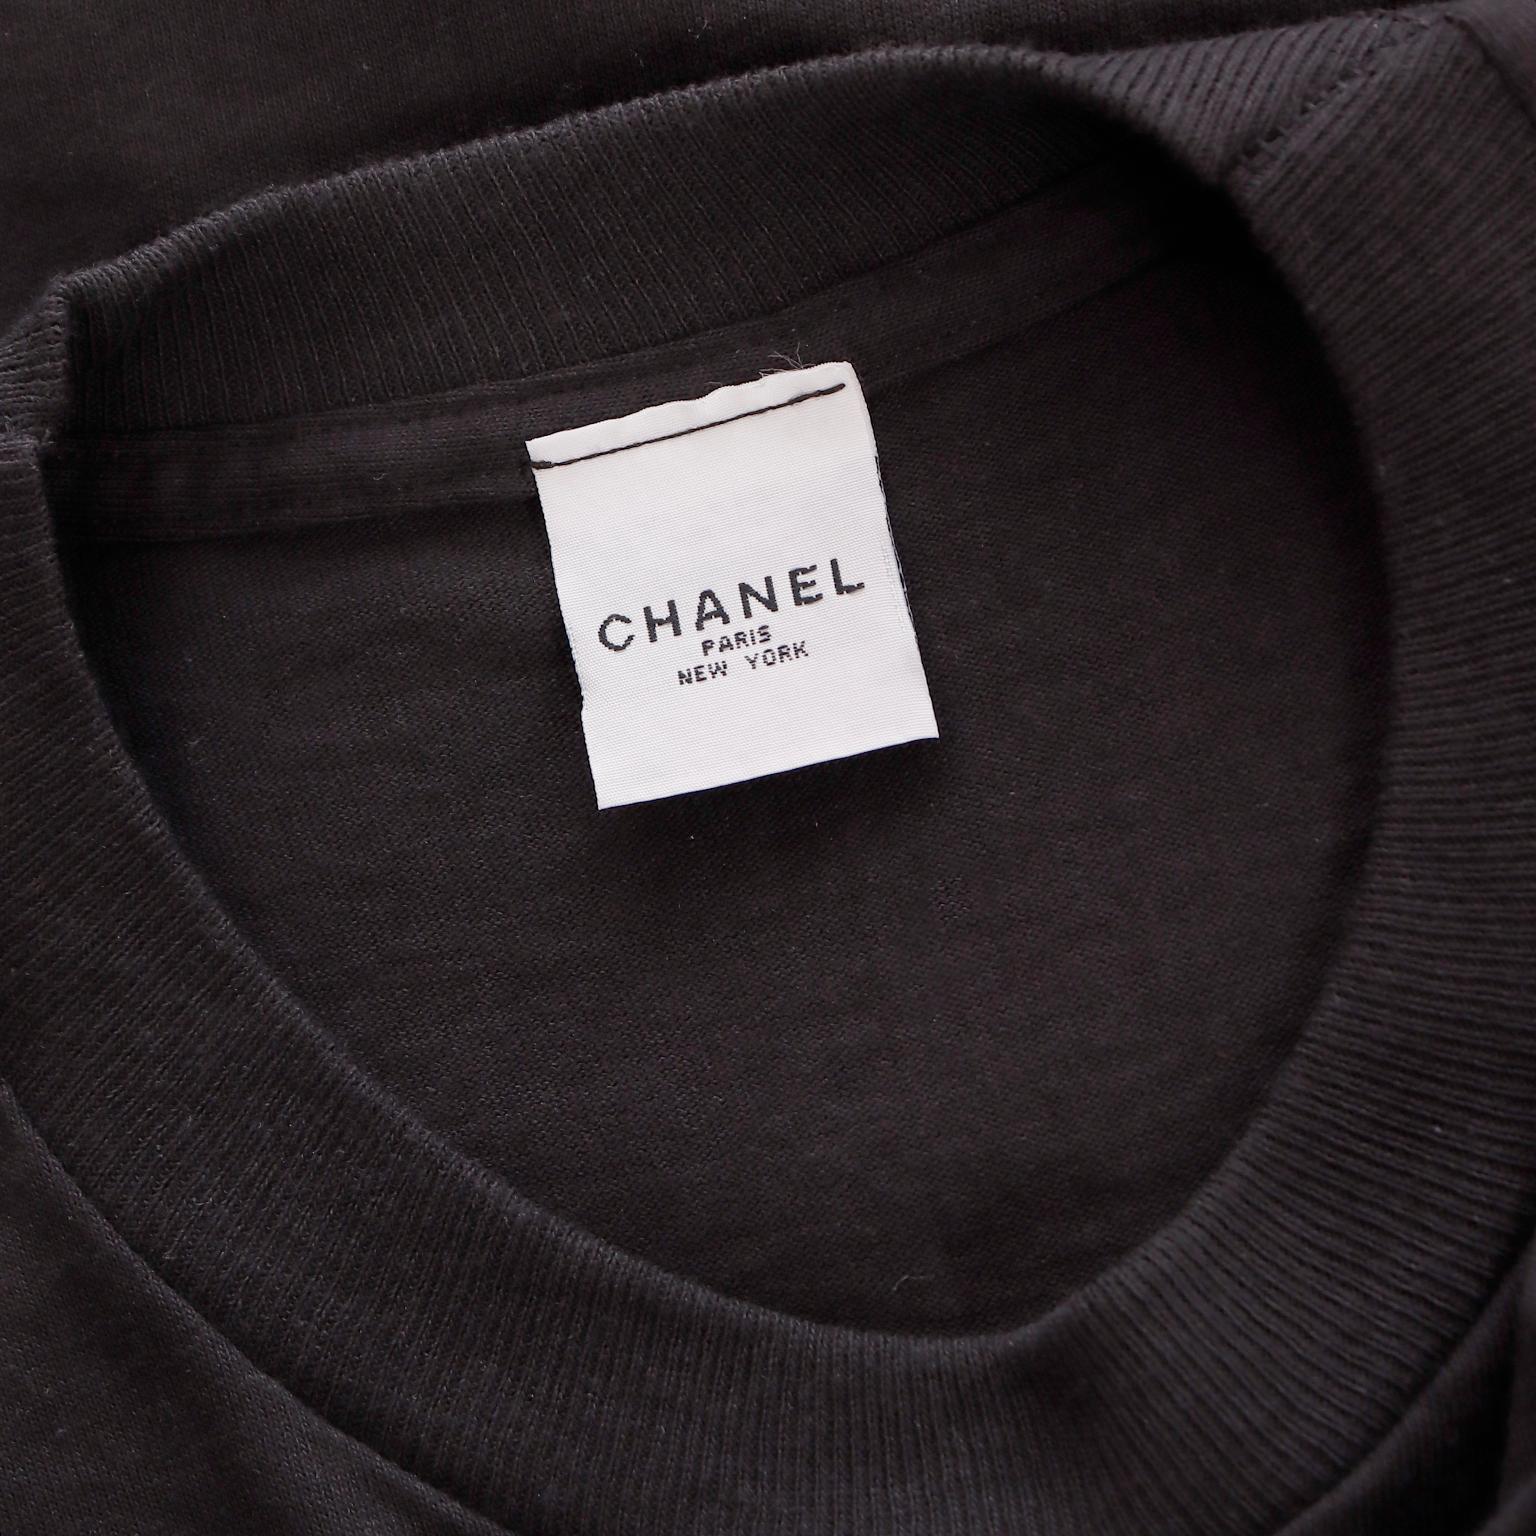 Vintage 1990 Chanel Egoiste Black & White Cotton Campaign Promotional Tee Shirt 1